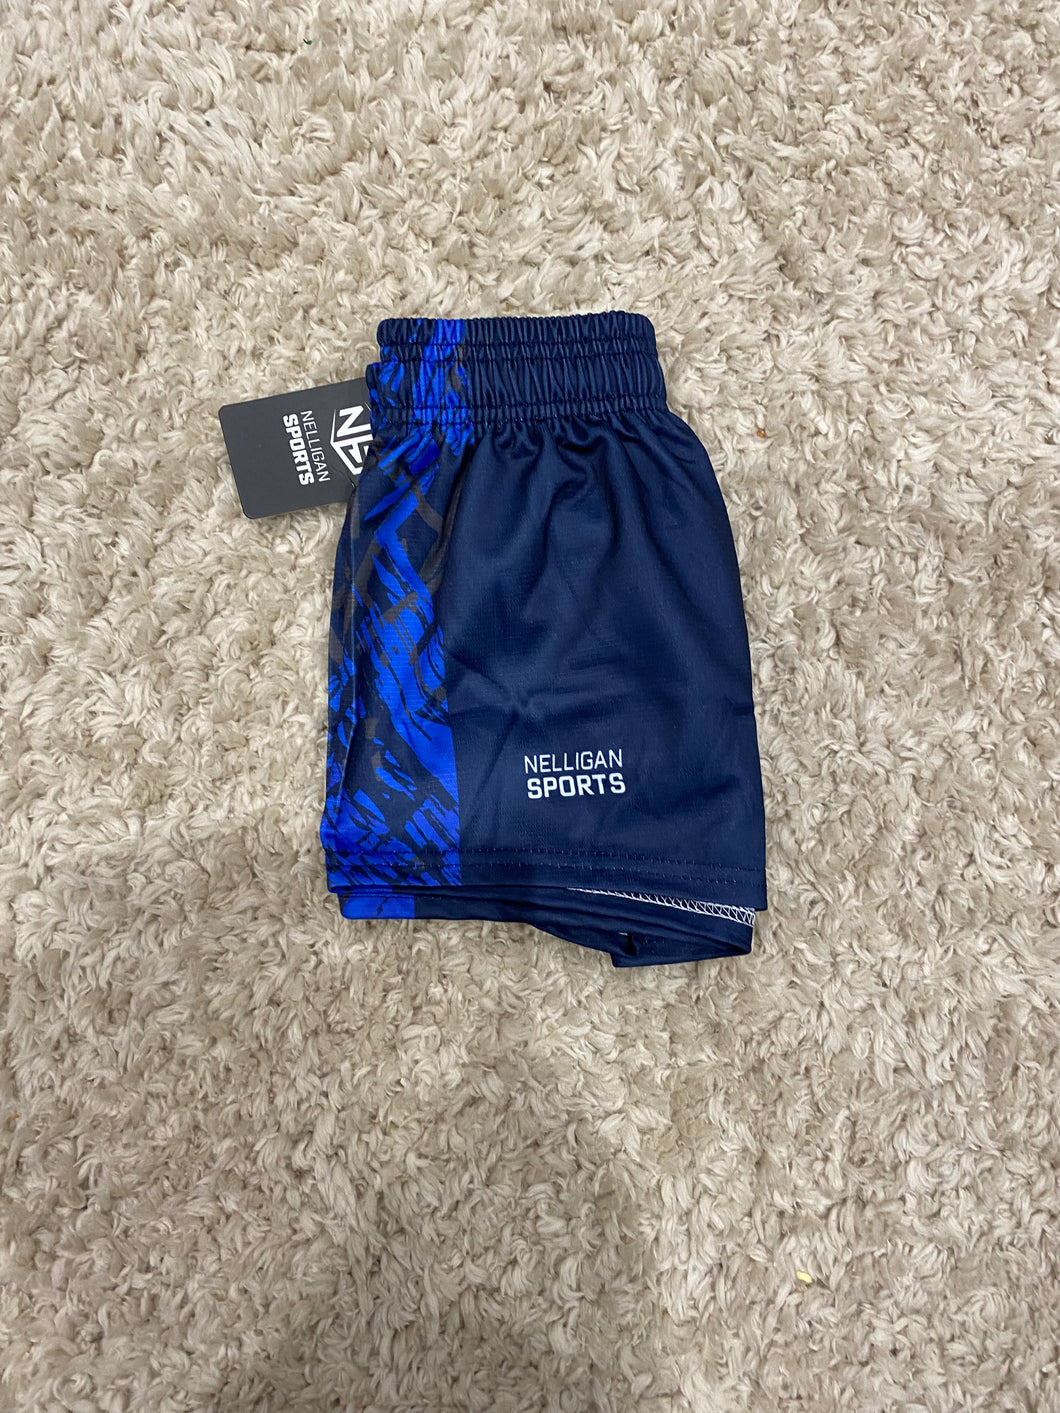 Training Pack Shorts (Navy/Blue)